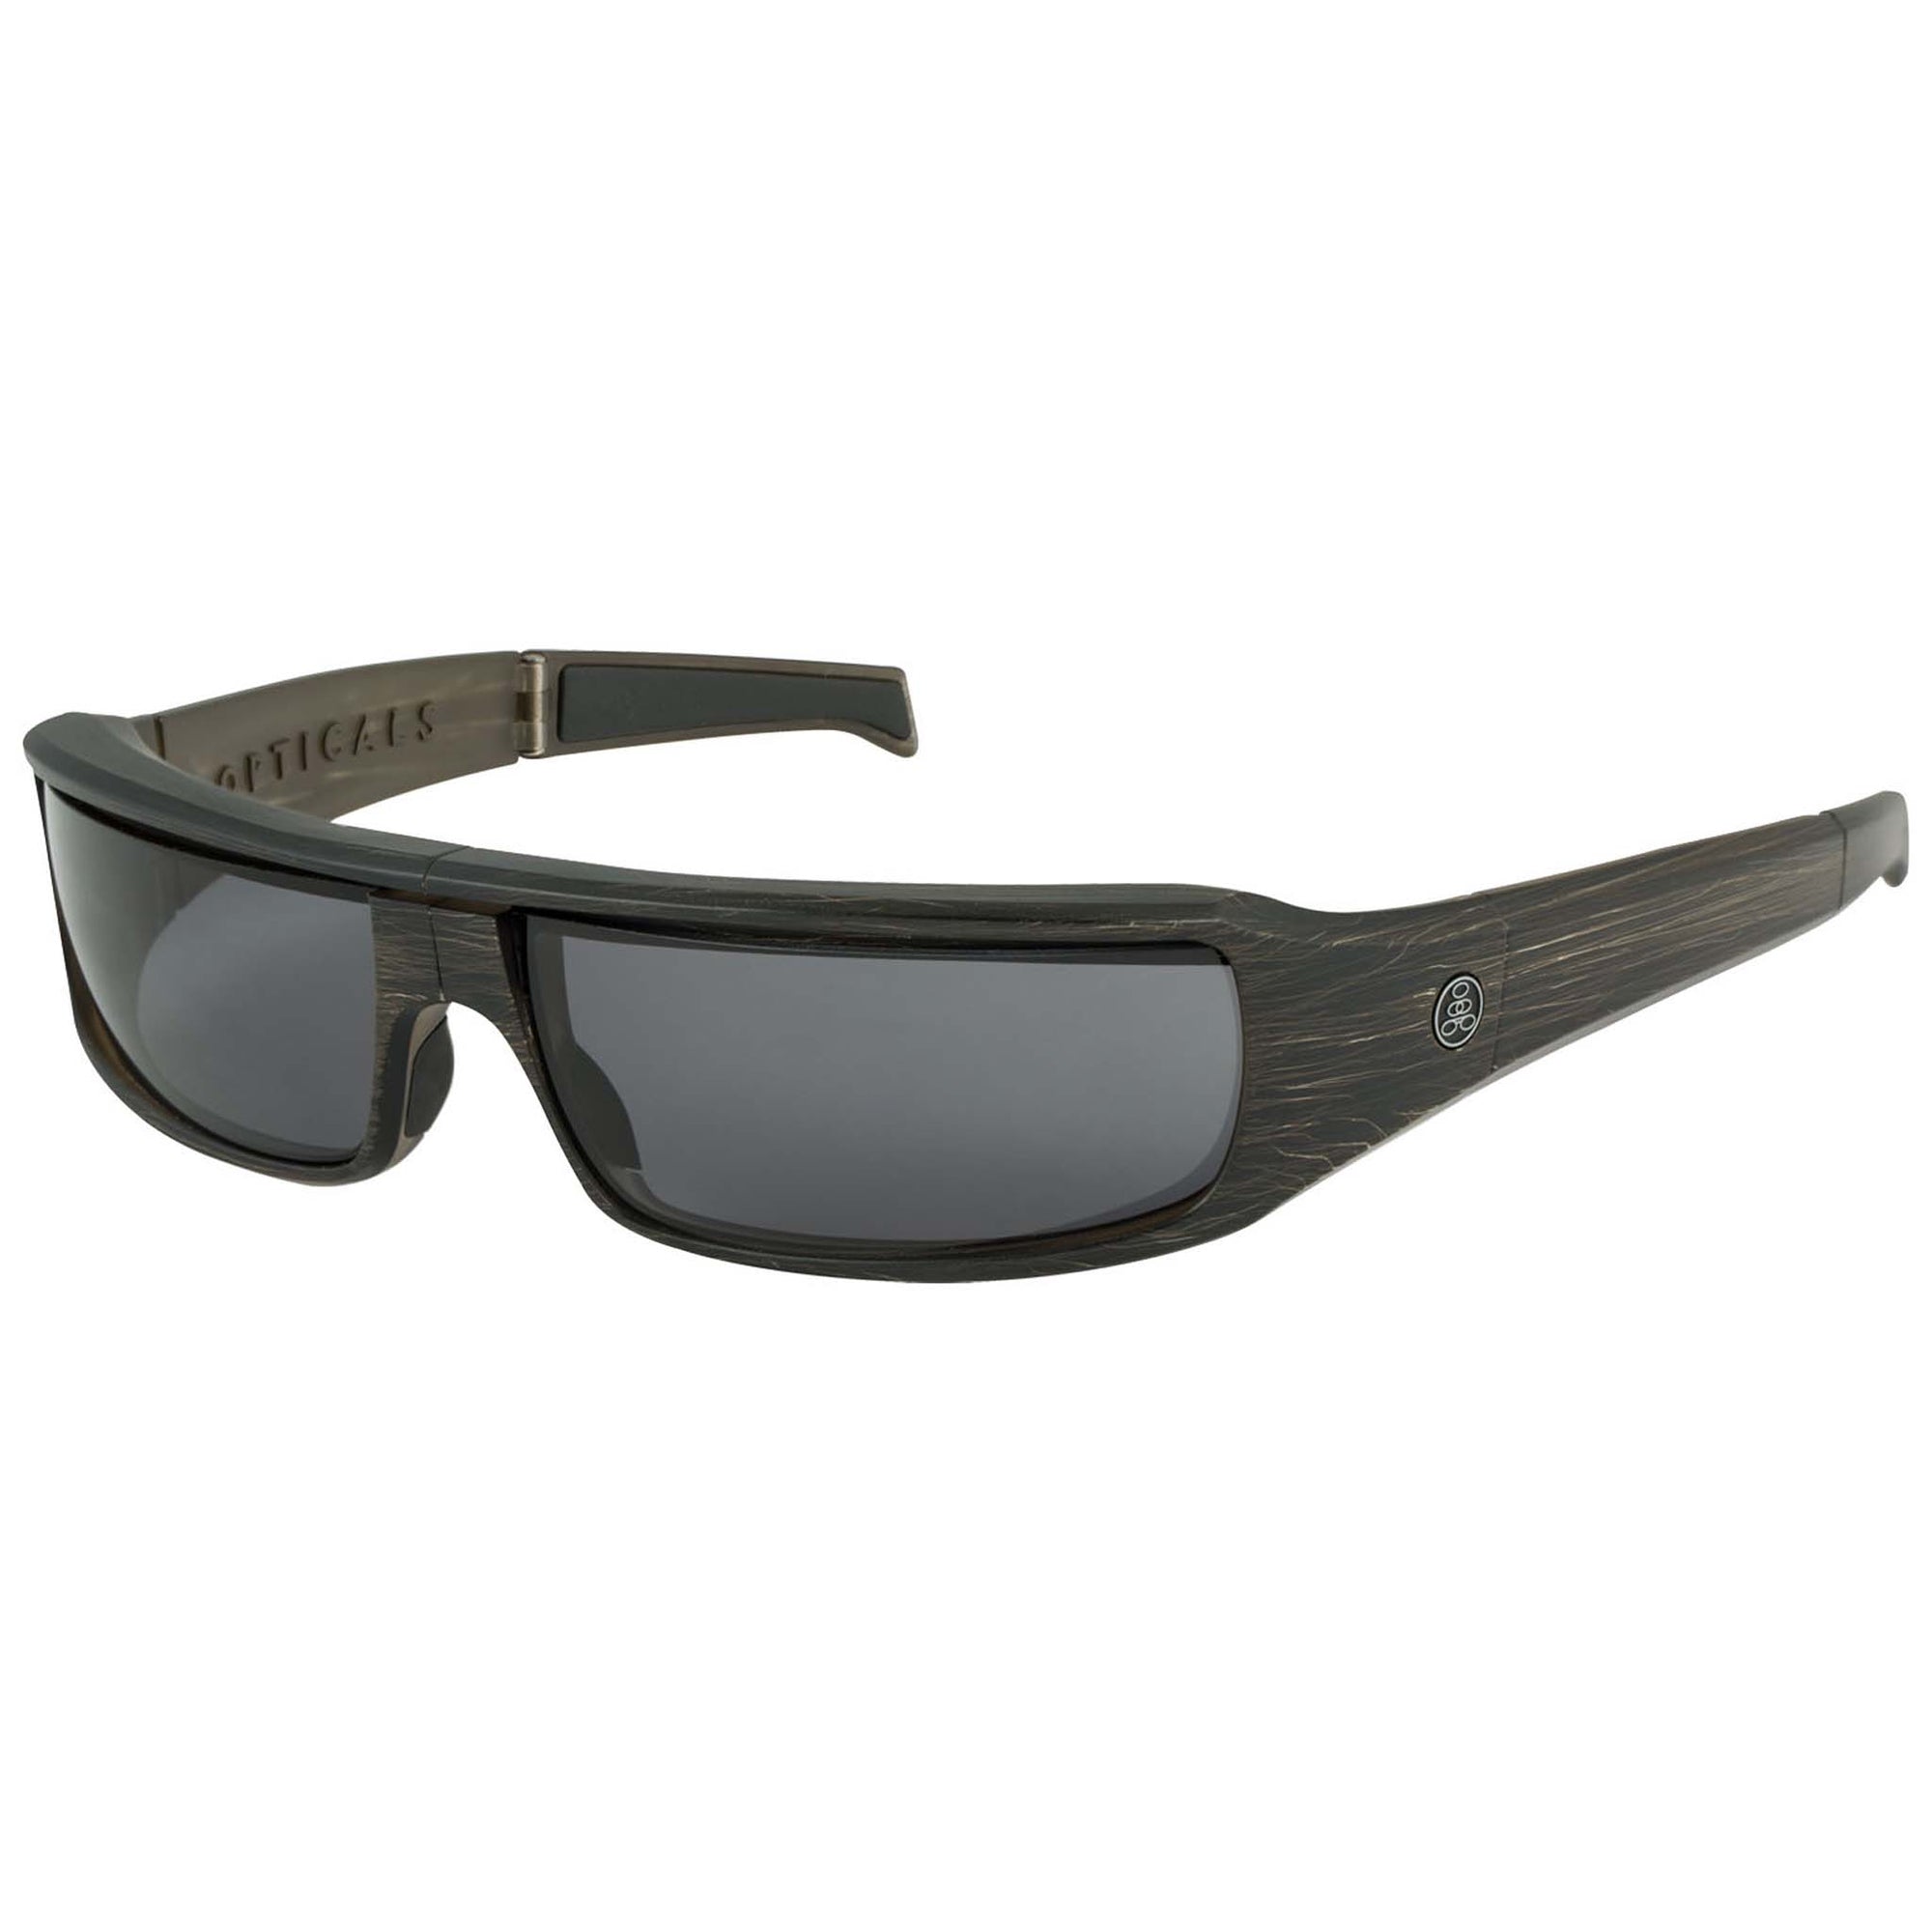 Popticals, Premium Compact Sunglasses, PopSign, 090020-ZUGP, Polarized Sunglasses, Matte Brush Black Frame, Gray Lenses, Glam View